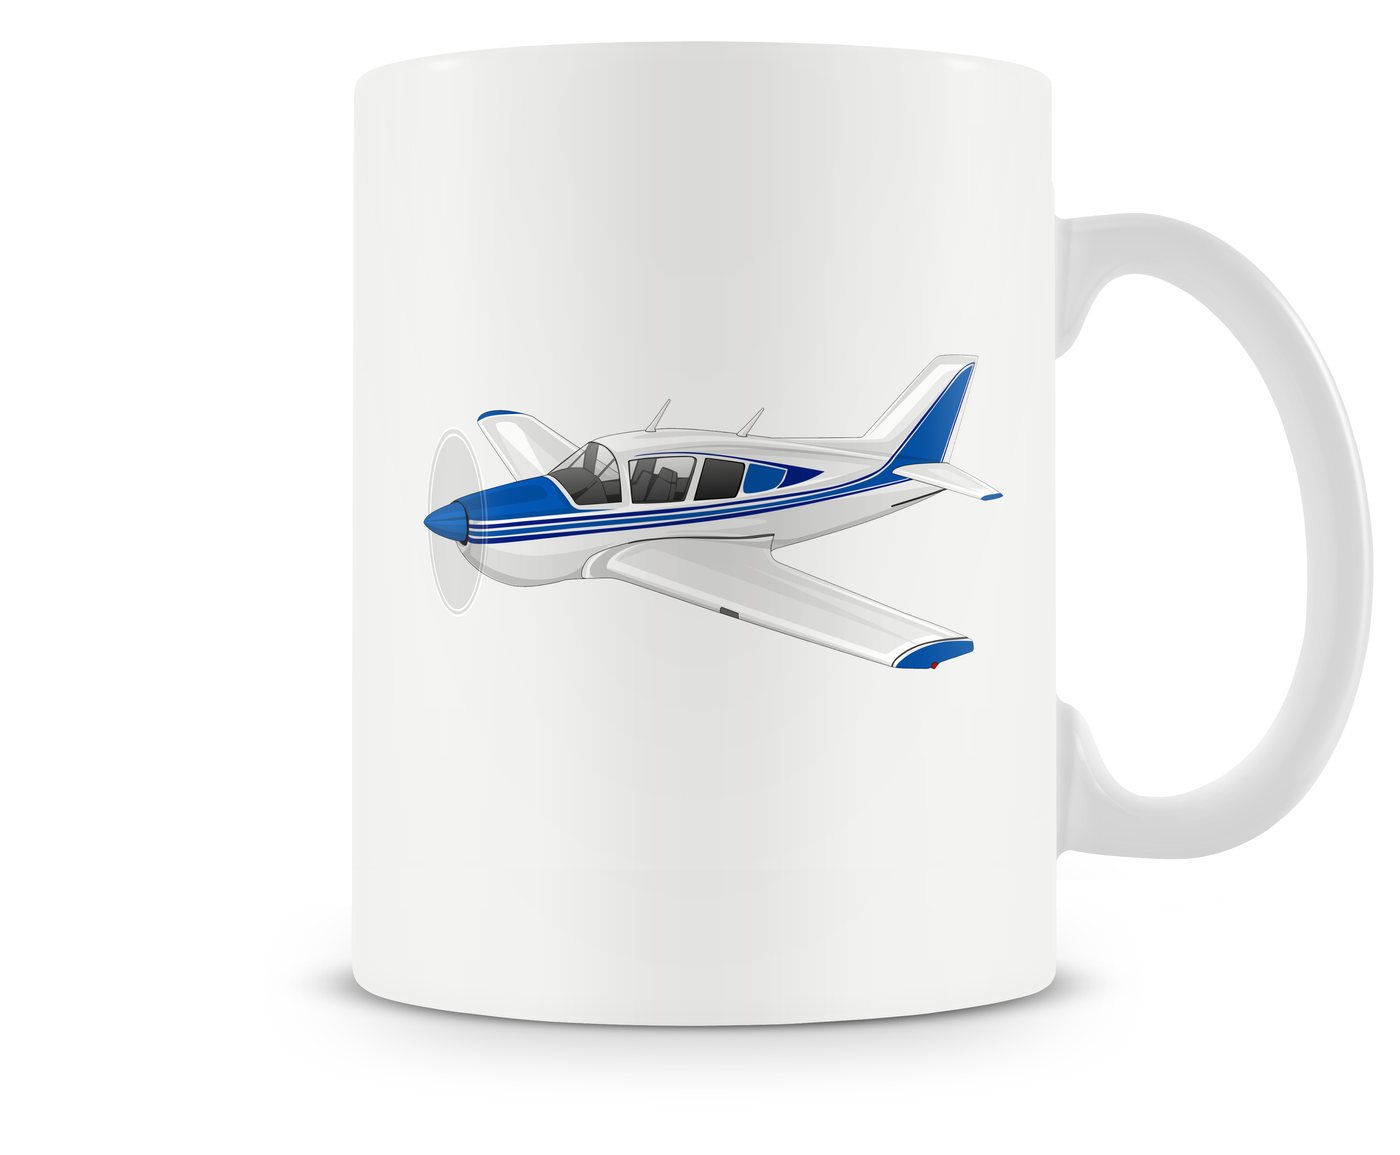 Bellanca Viking Mug - Aircraft Mugs